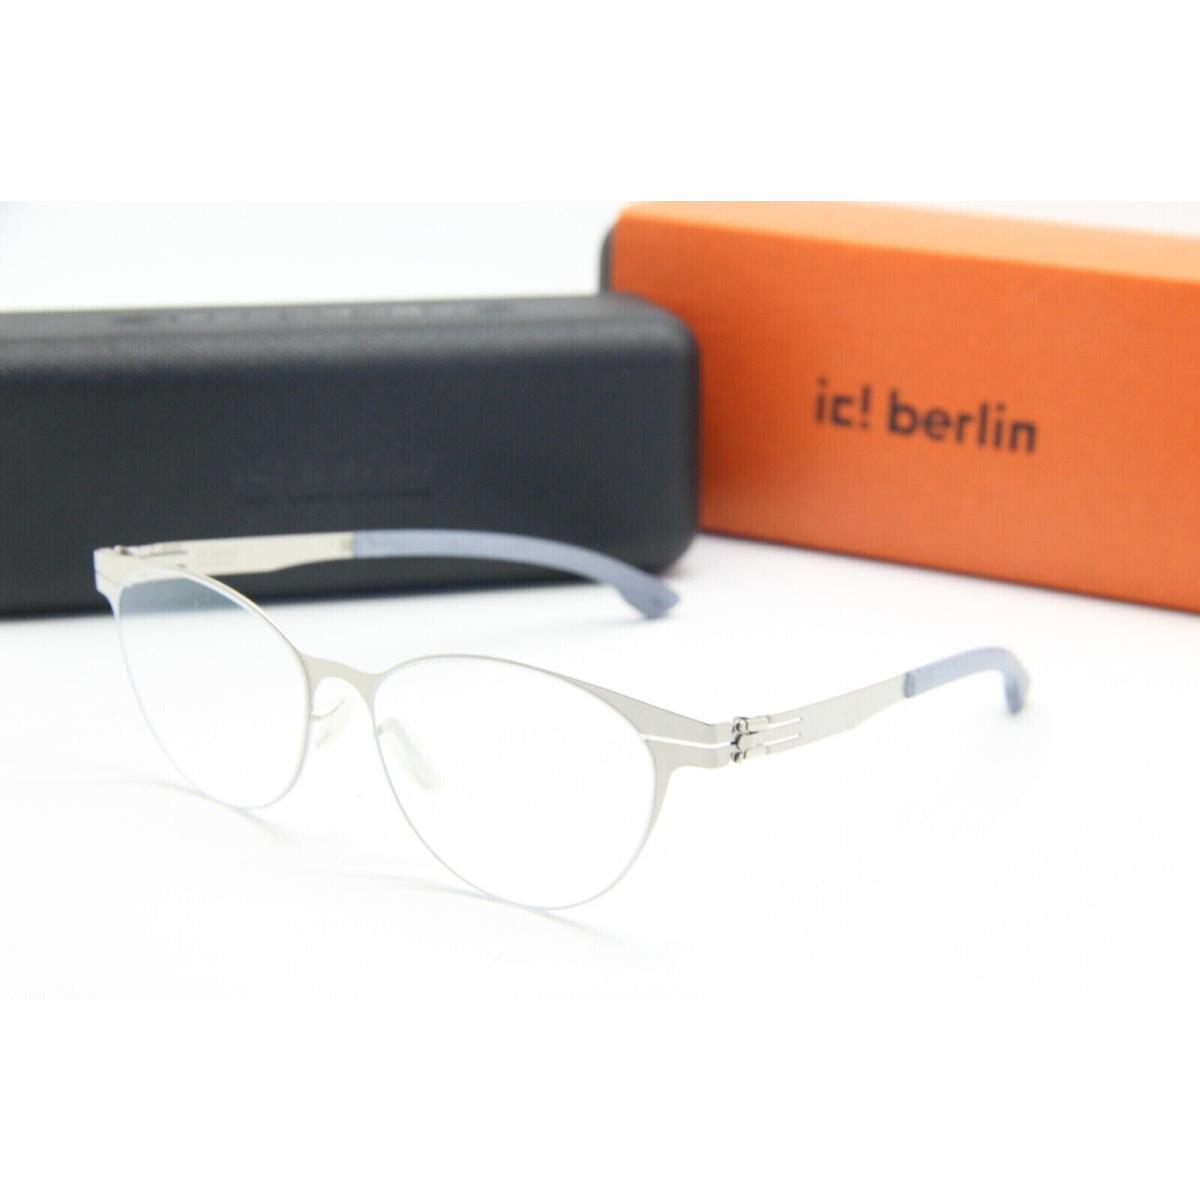 IC Berlin Model Bossa Nova Pearl Grey Frames Eyeglasses 50-15